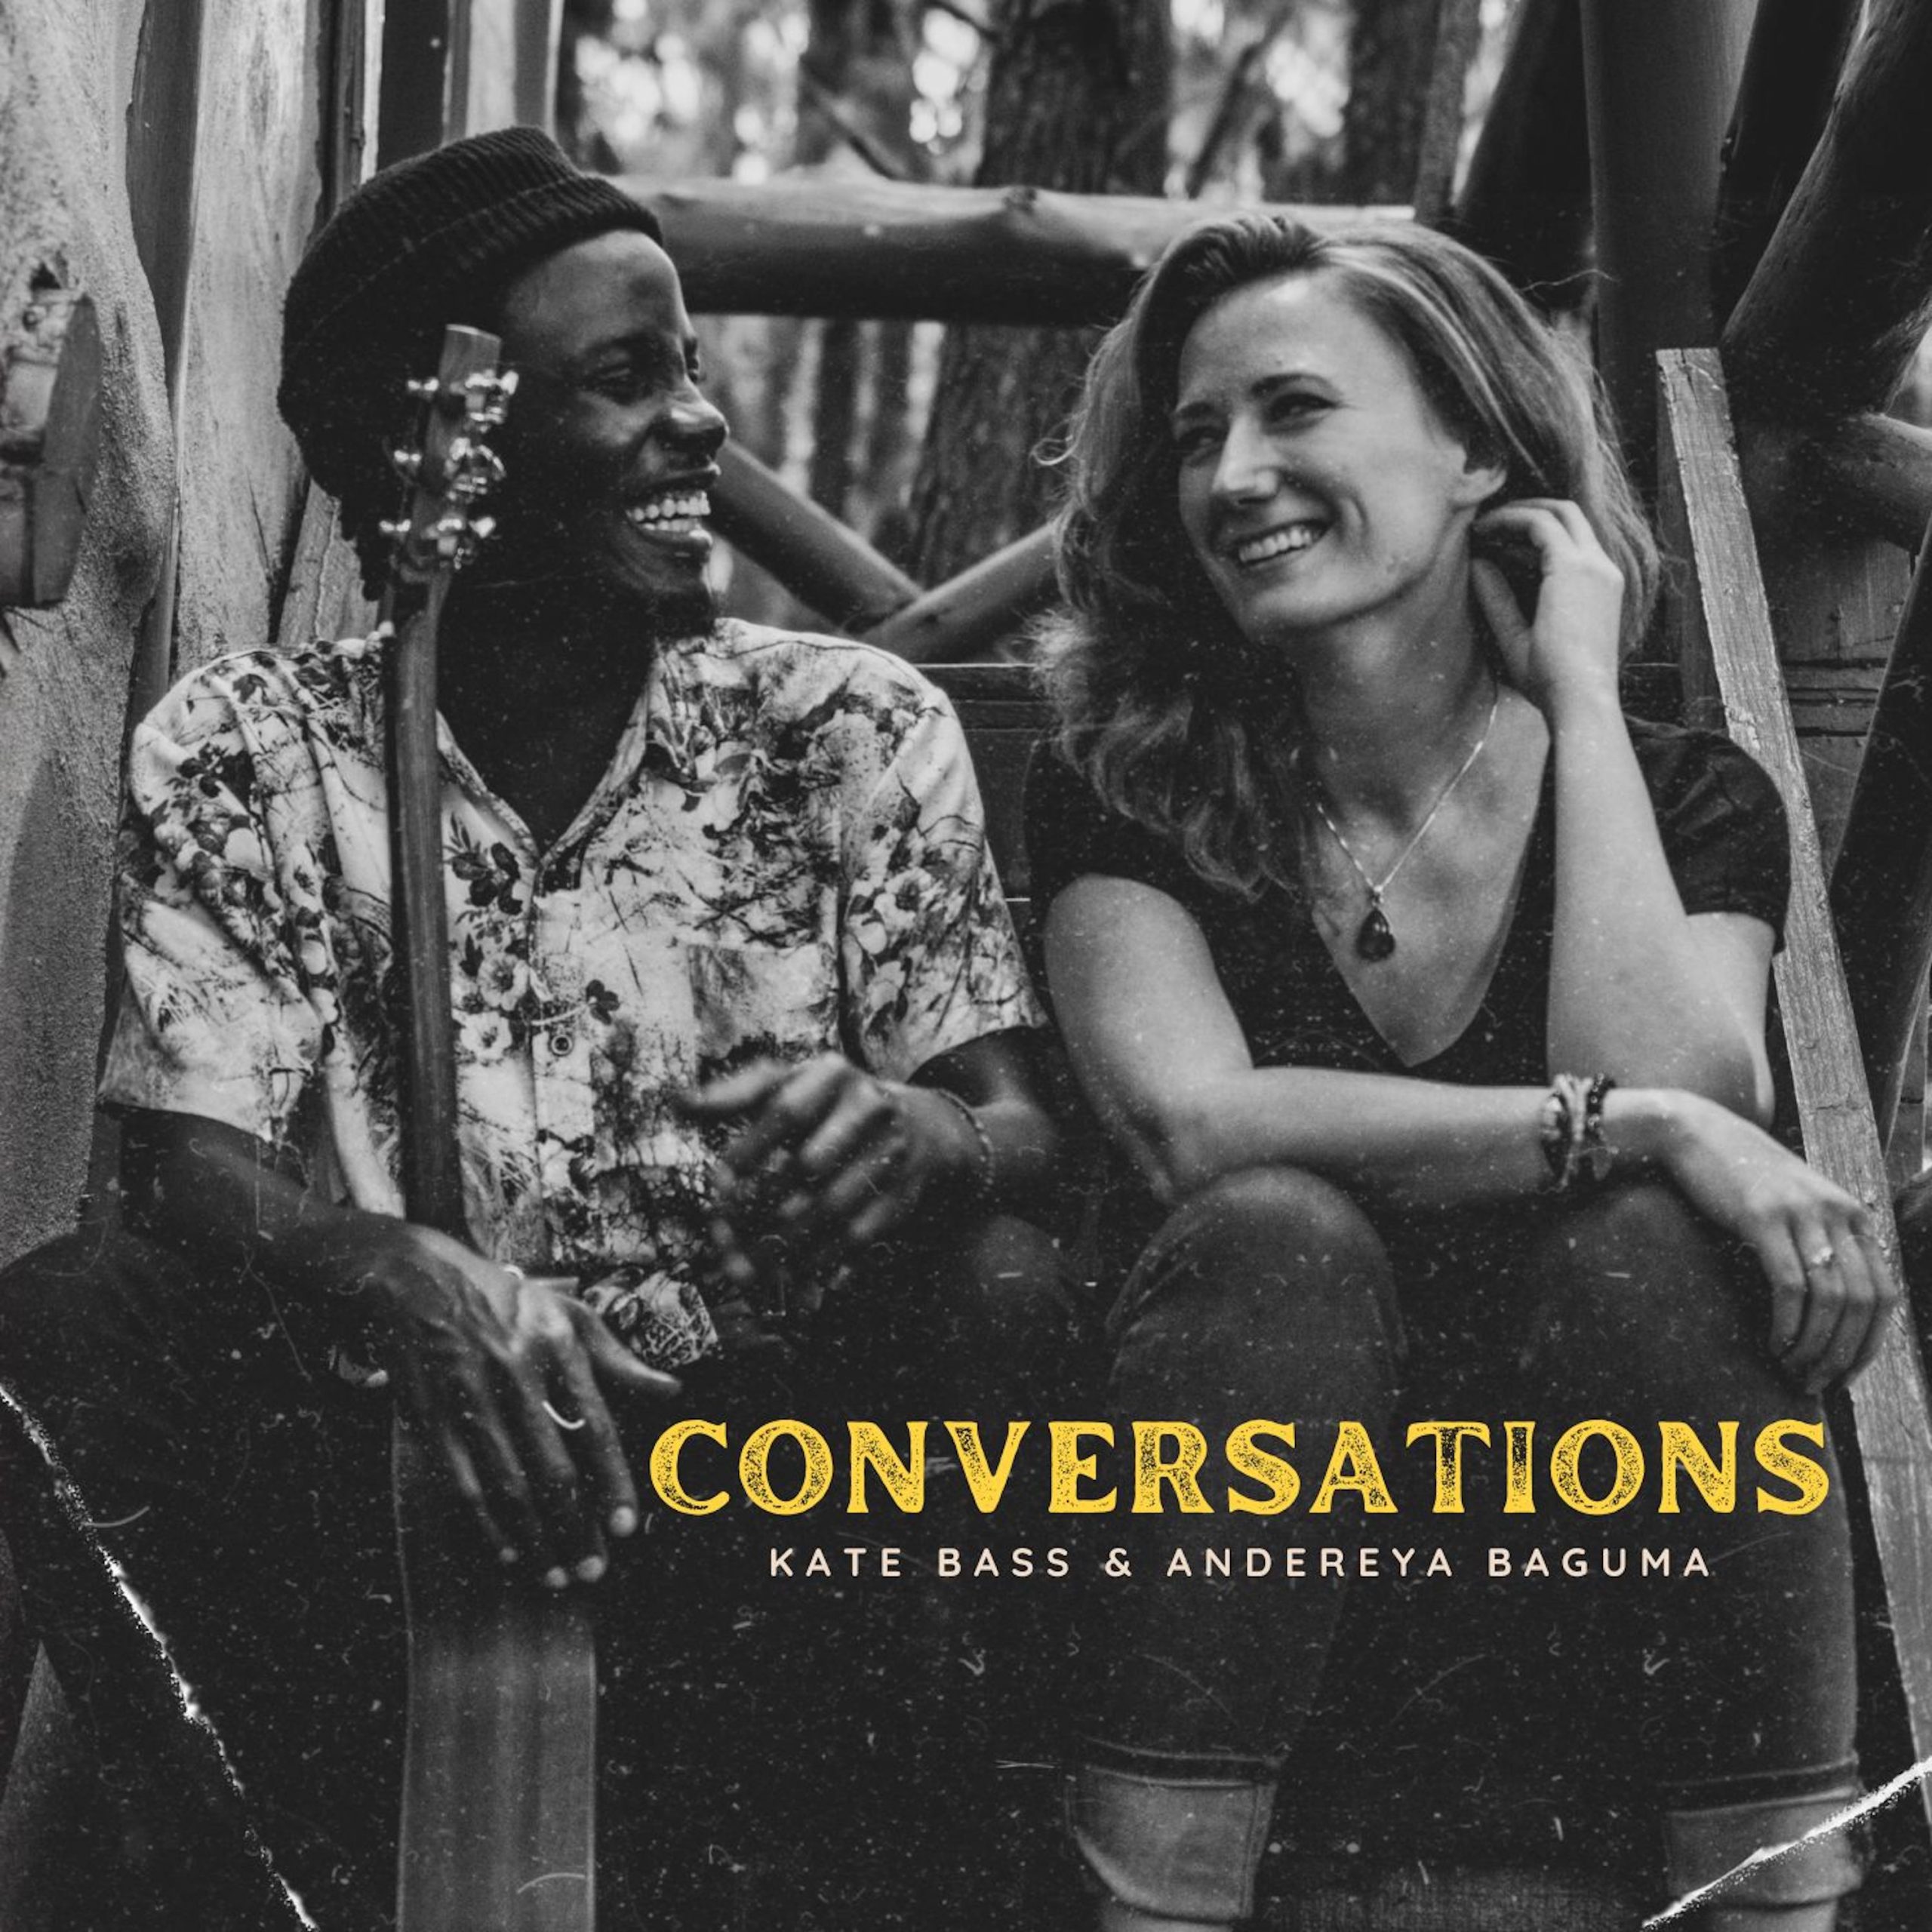 “Conversations” Uganda will be released this week